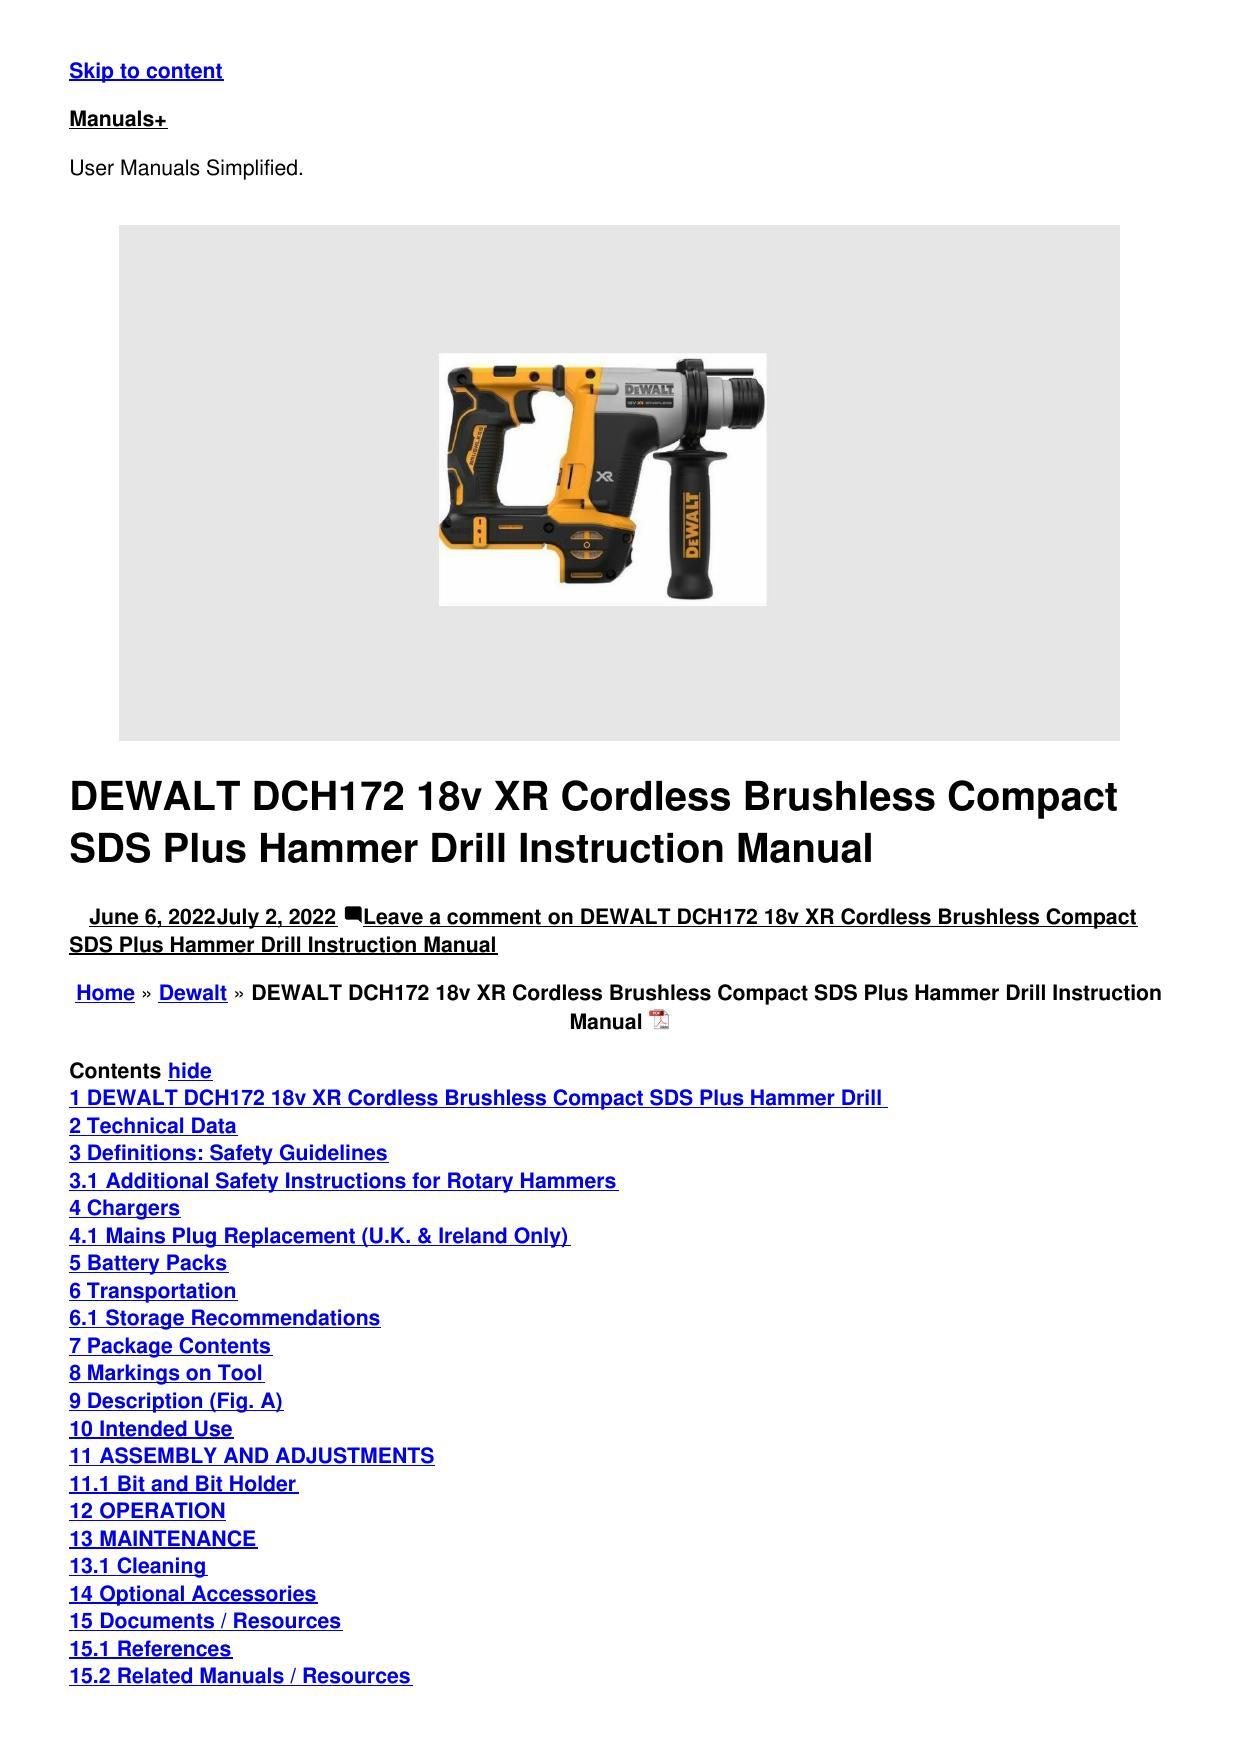 dewalt-dch172-18v-xr-cordless-brushless-compact-sds-plus-hammer-drill-instruction-manual.pdf